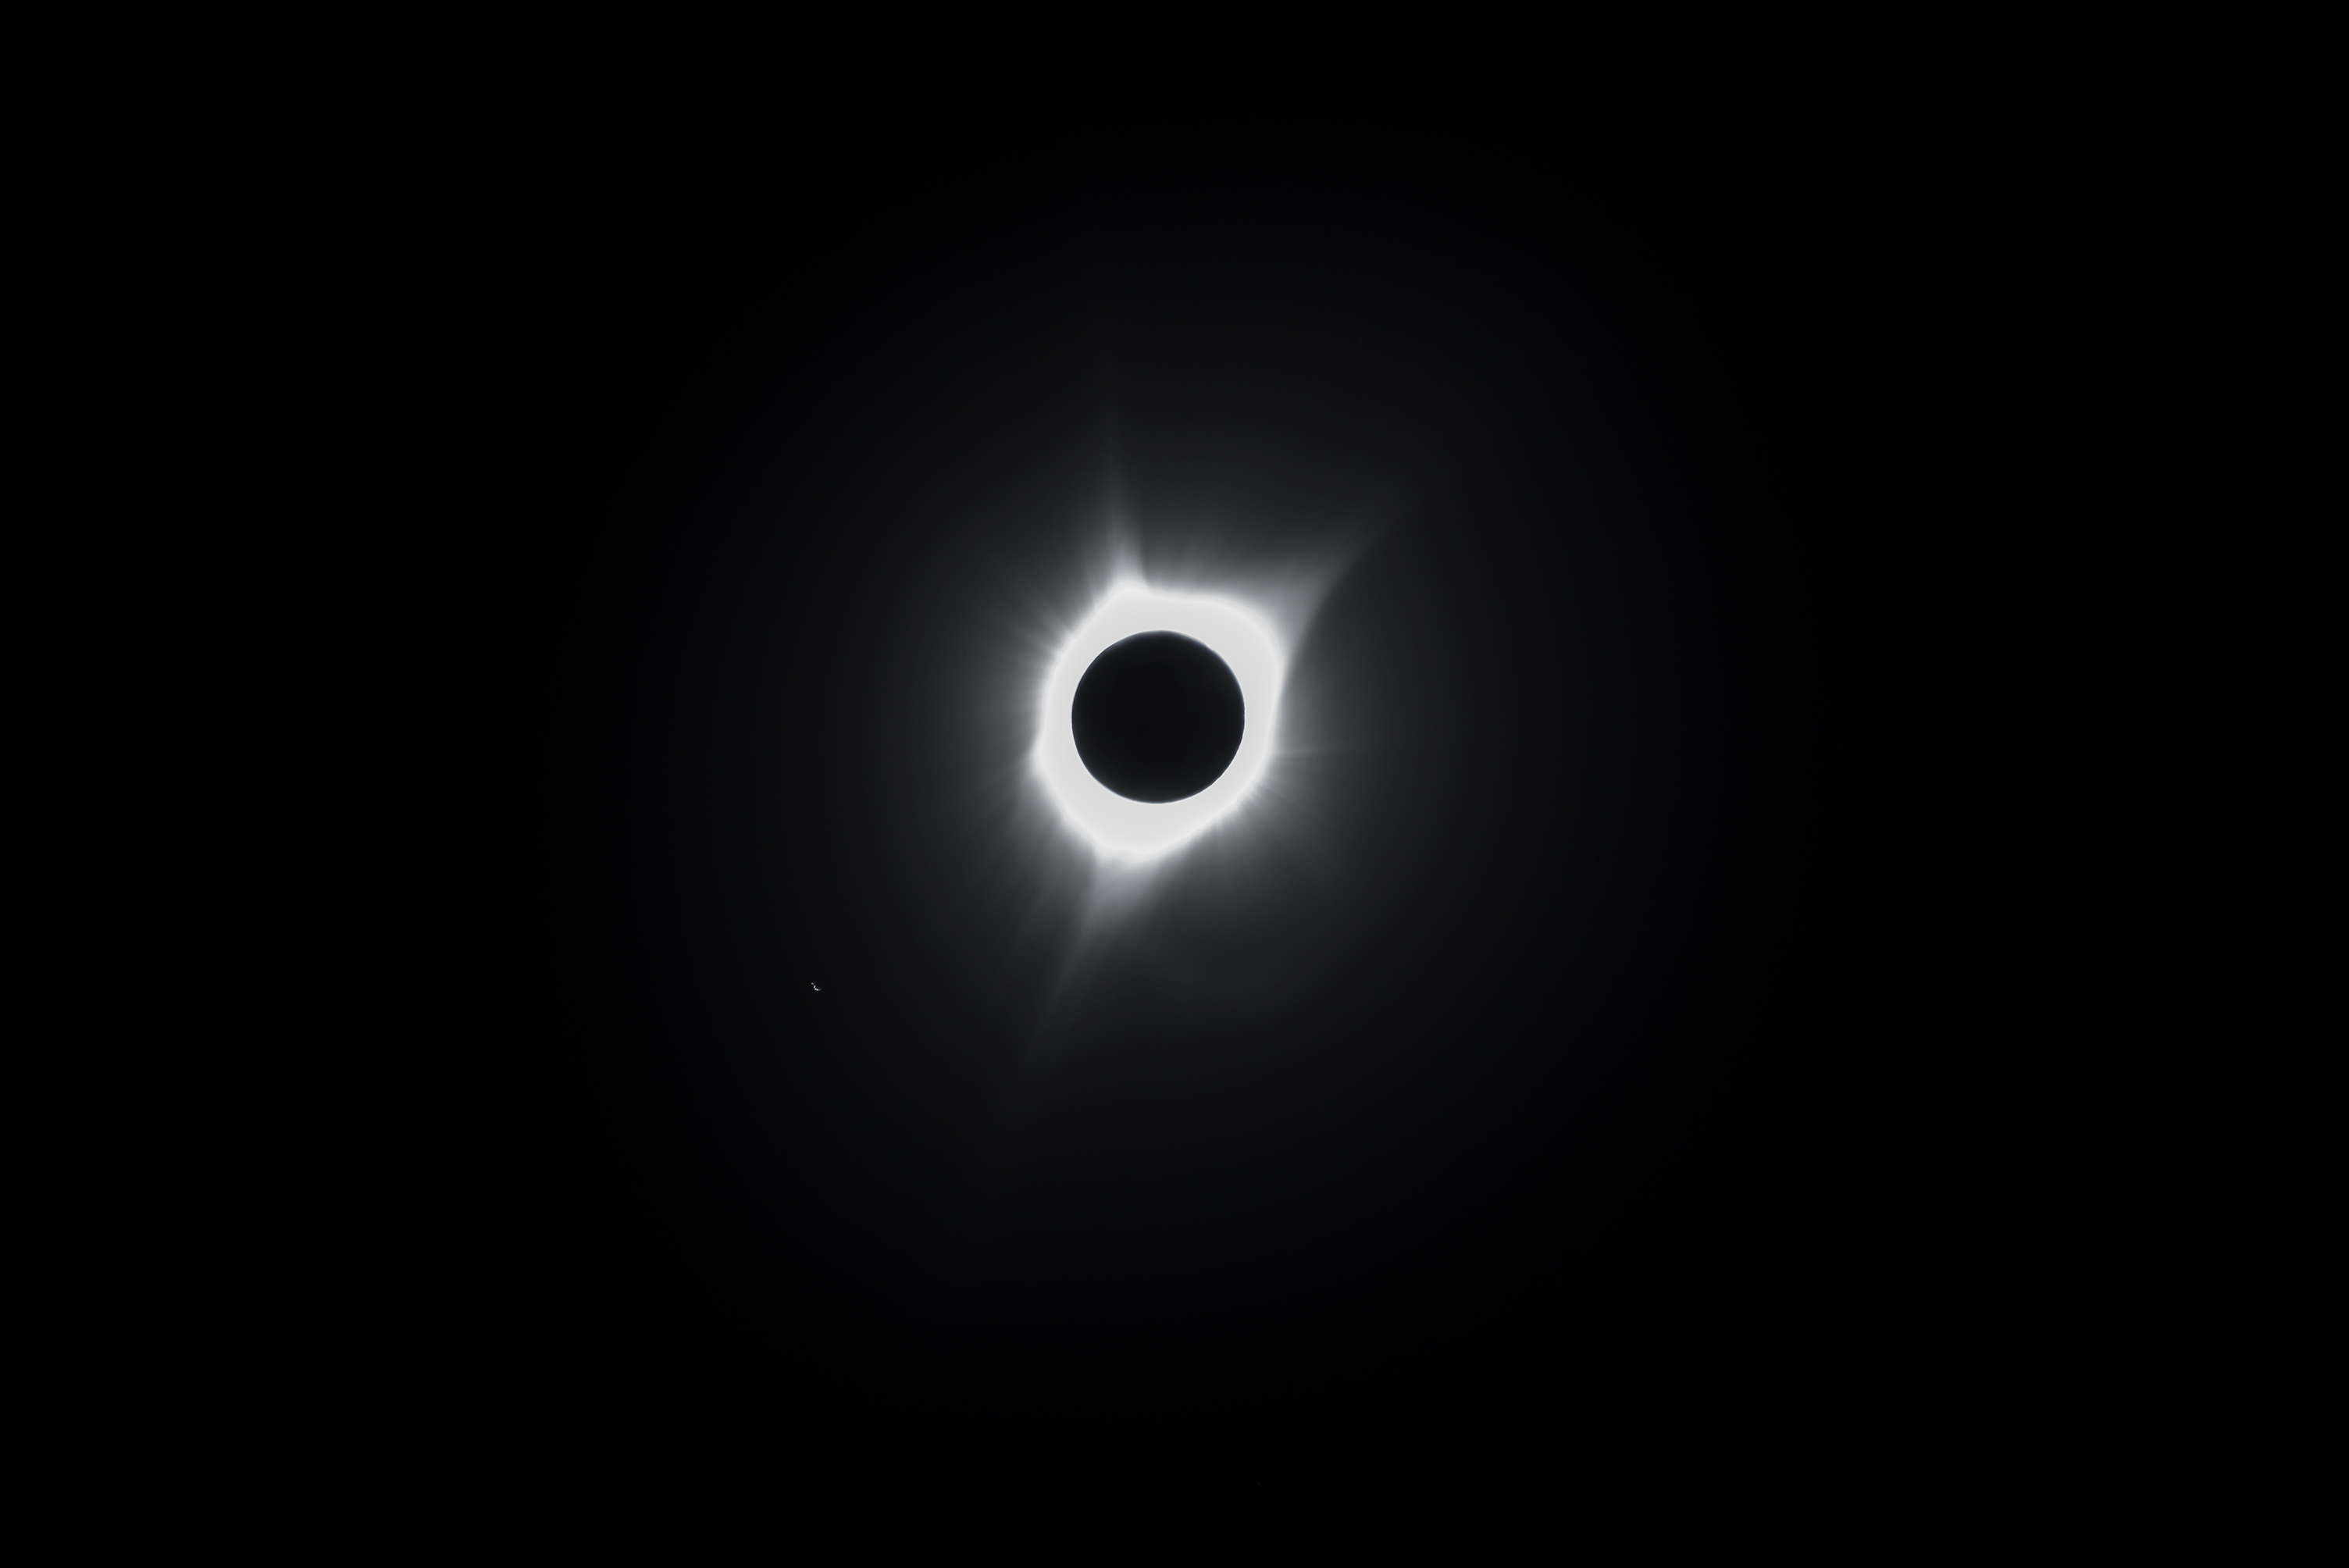 August 21st, 2017 eclipse